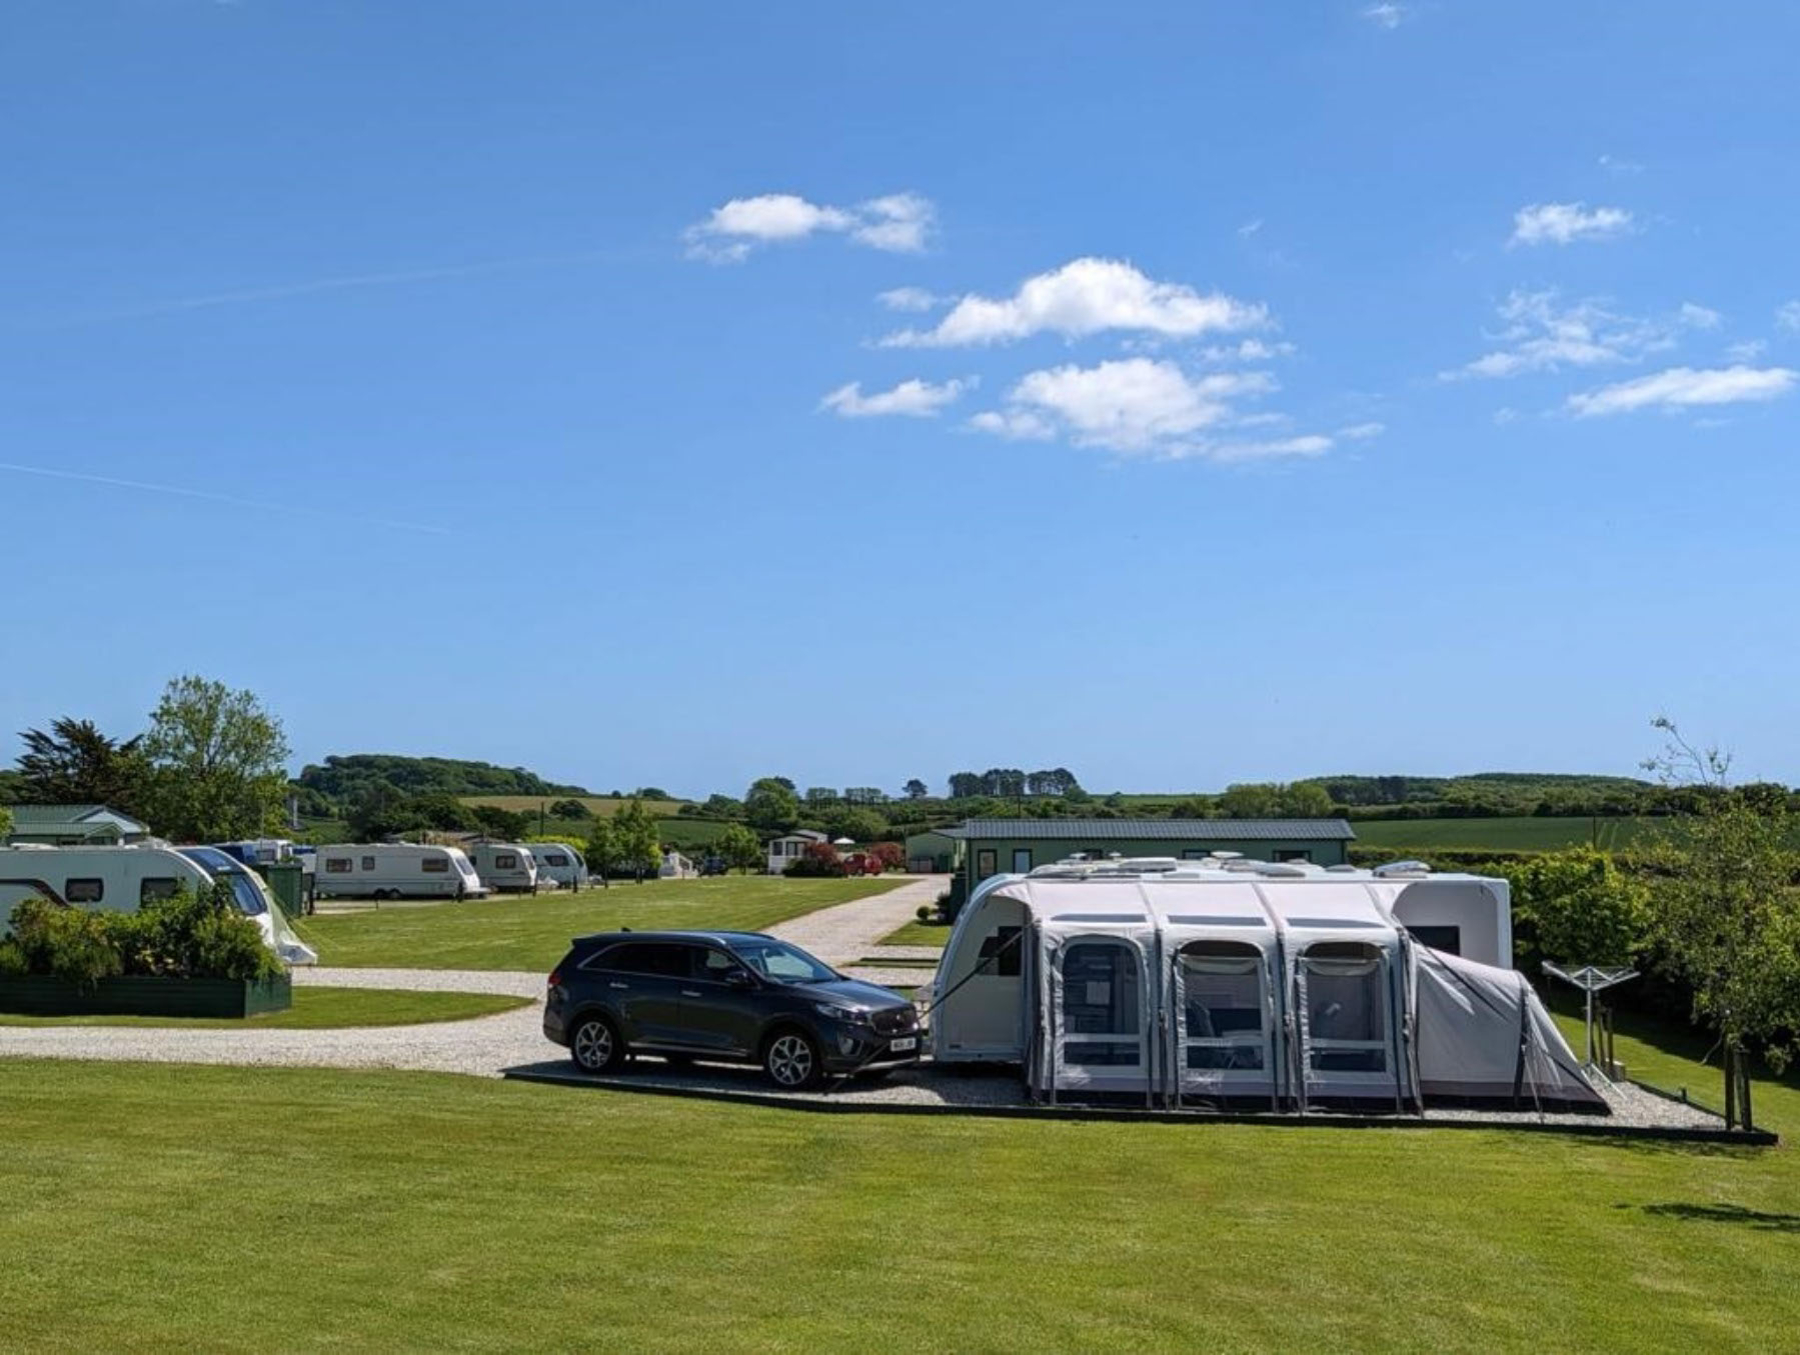 Image shows touring facilities at Trelay Holiday Park in Cornwall